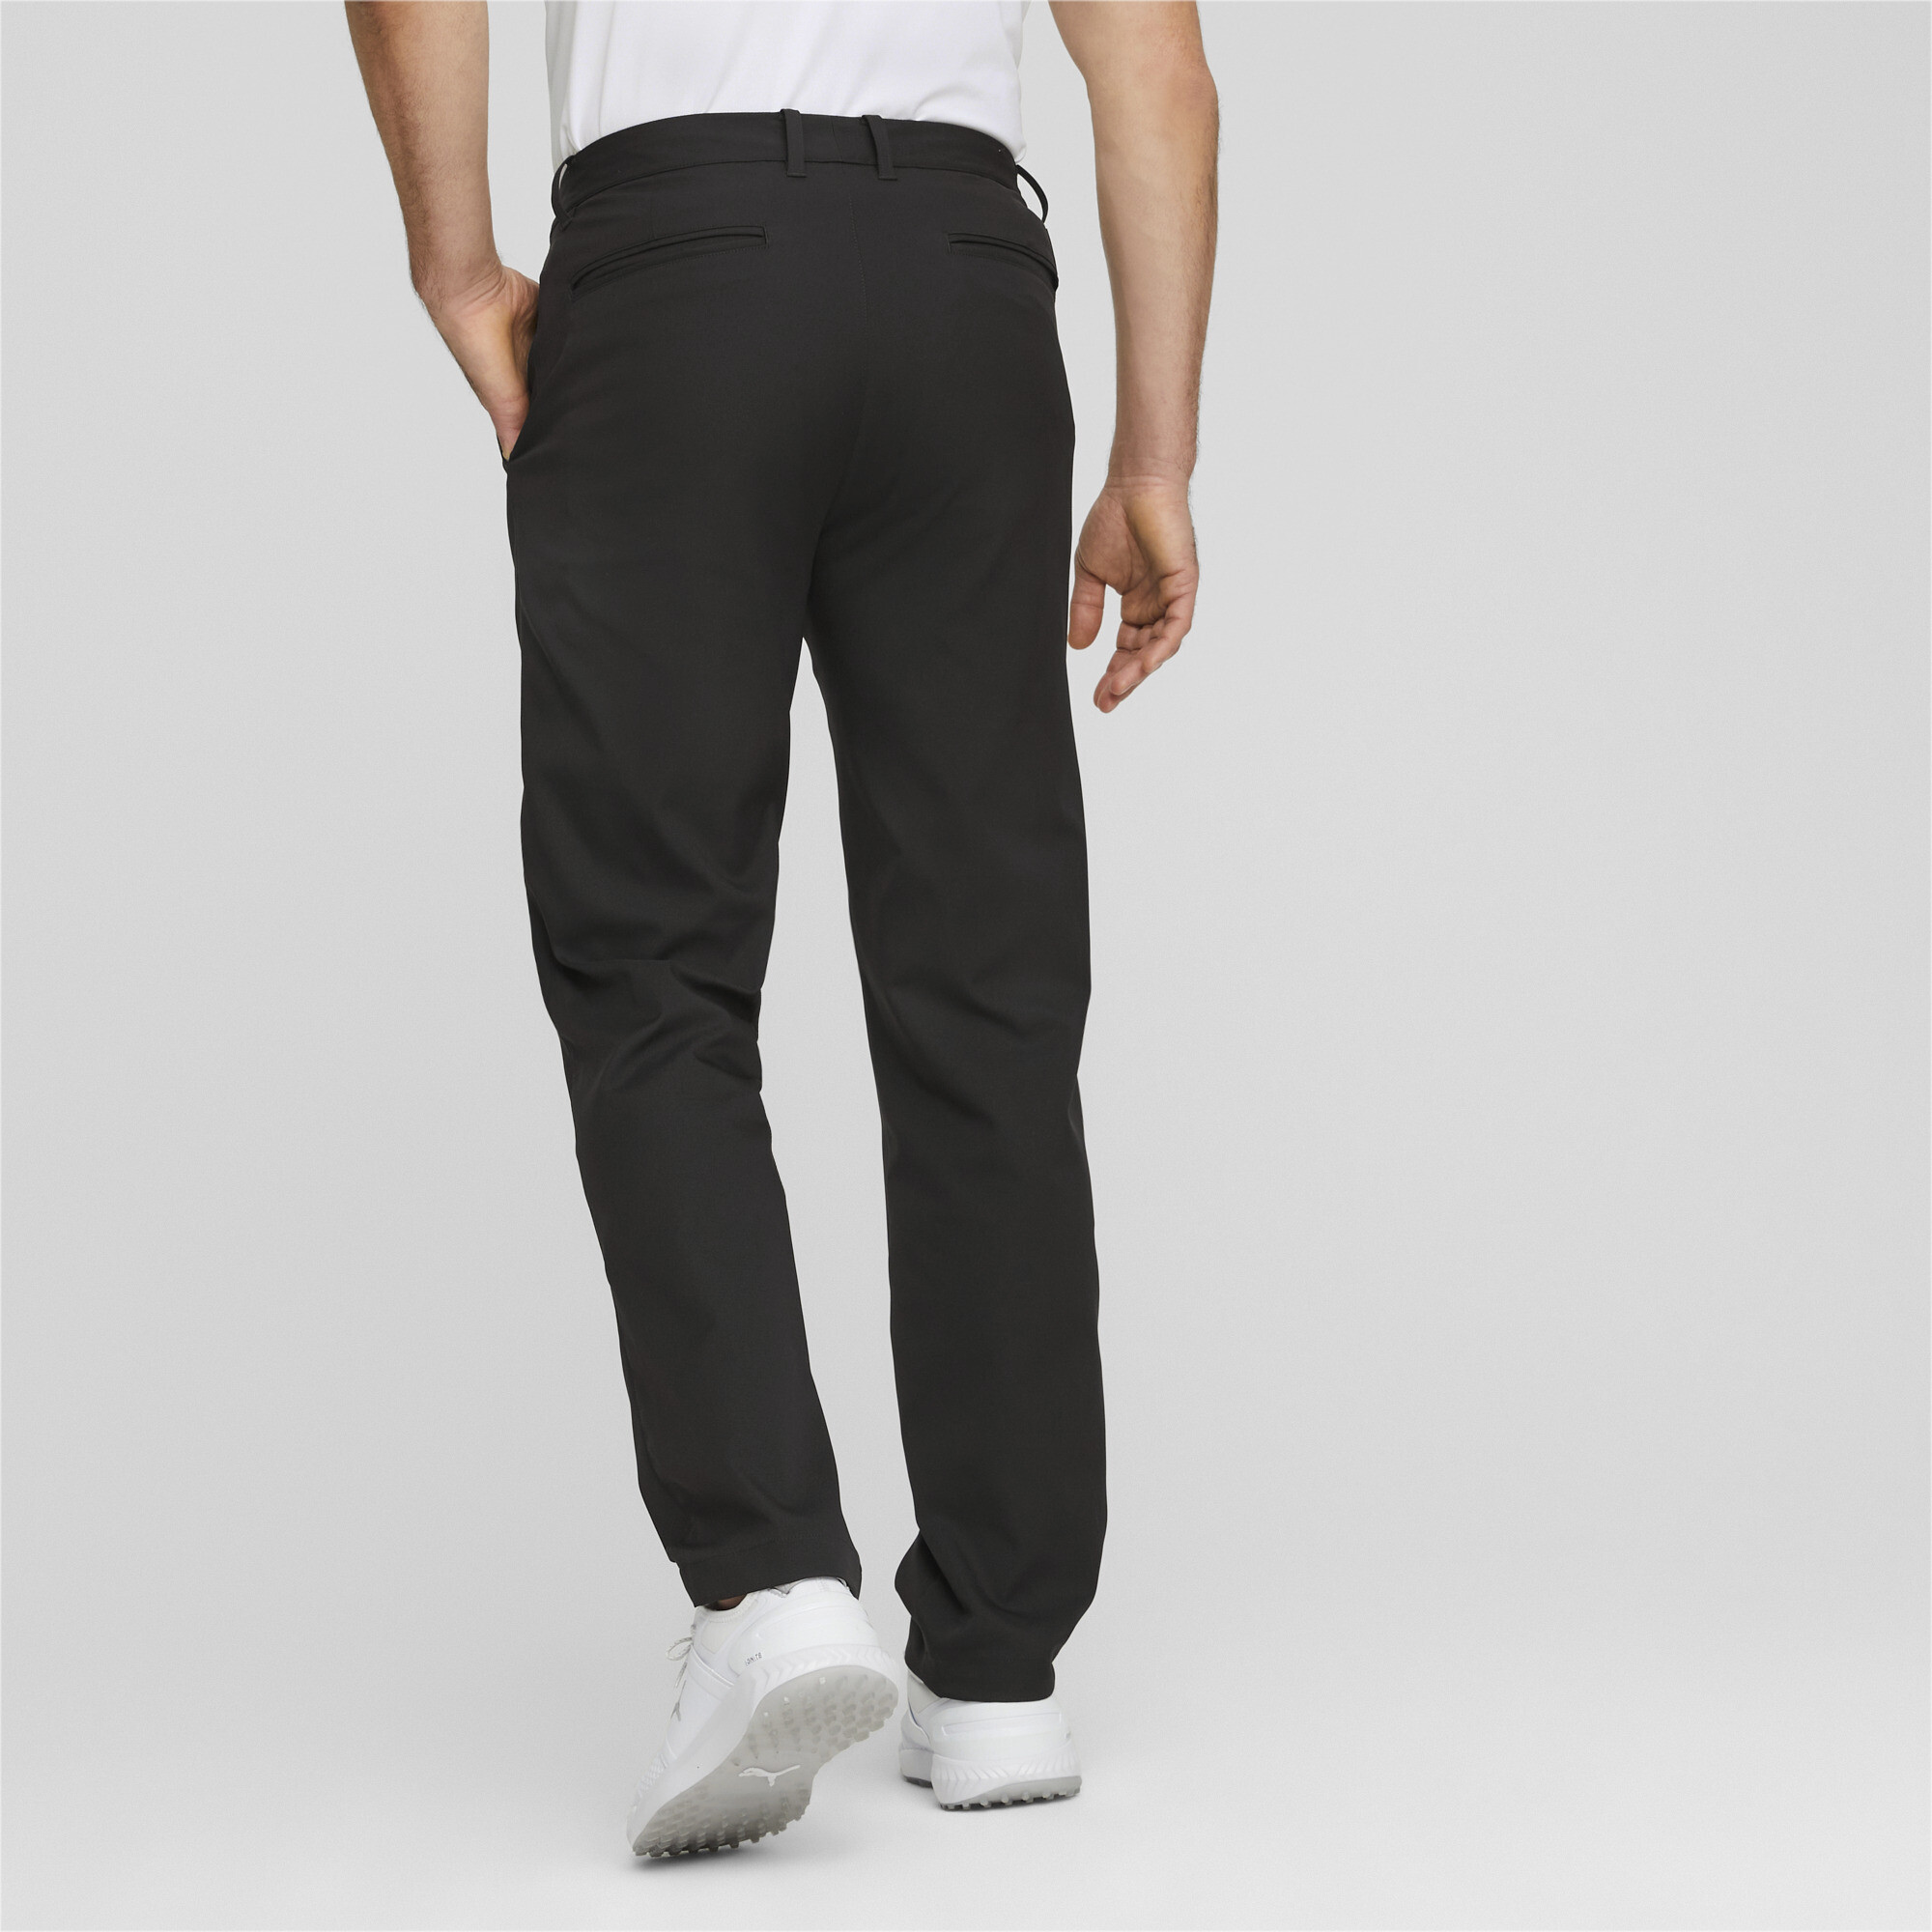 Men's Puma Dealer Golf Pants, Black, Size 32/30, Clothing